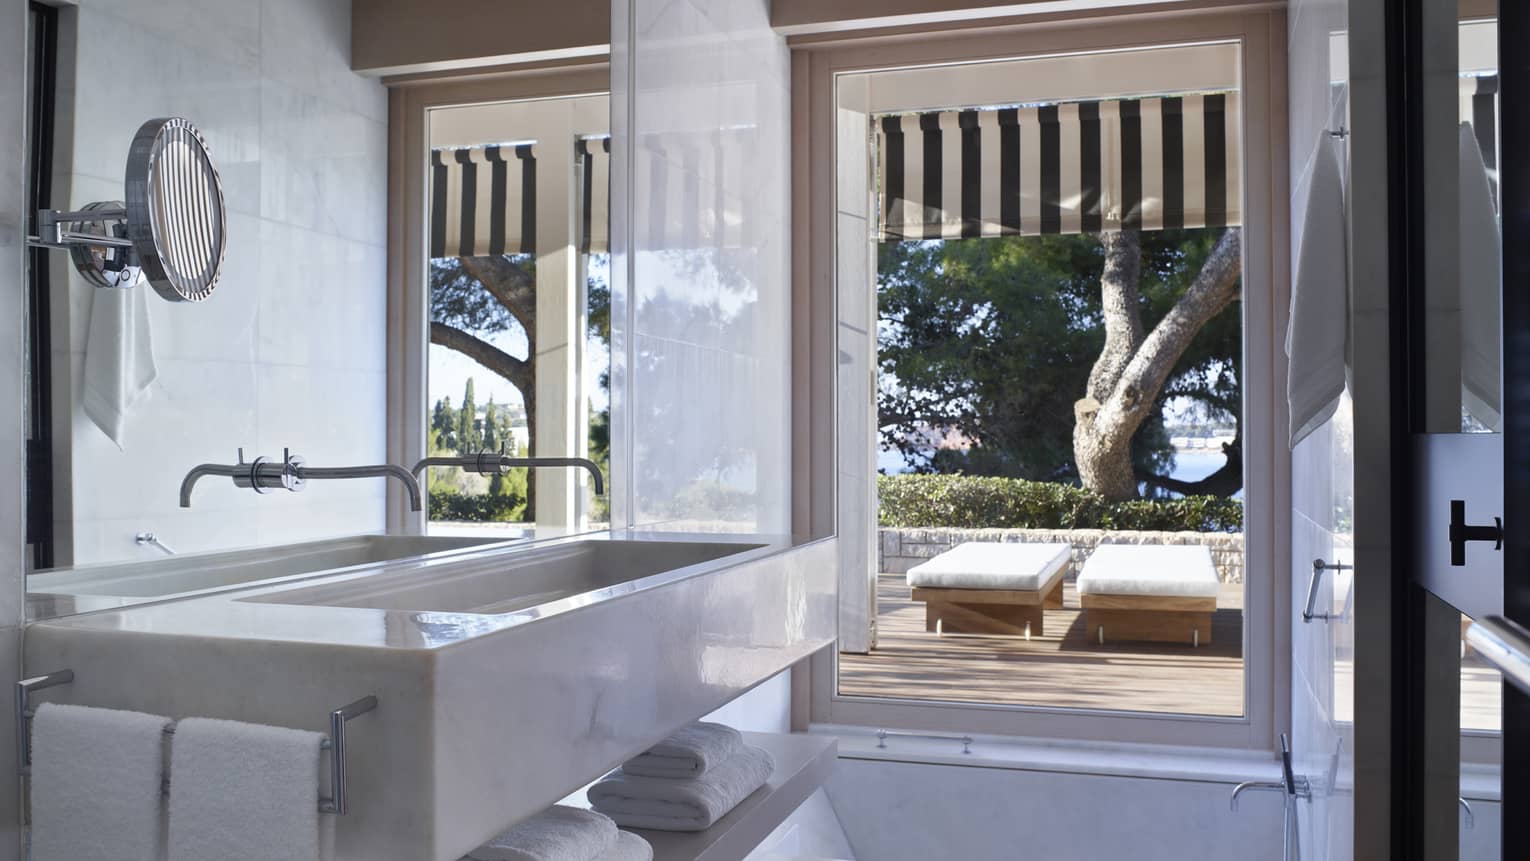 Bungalow Bathroom View with full-width marbled vanity, sink and mirror; floor-to-ceiling window overlooking terrace